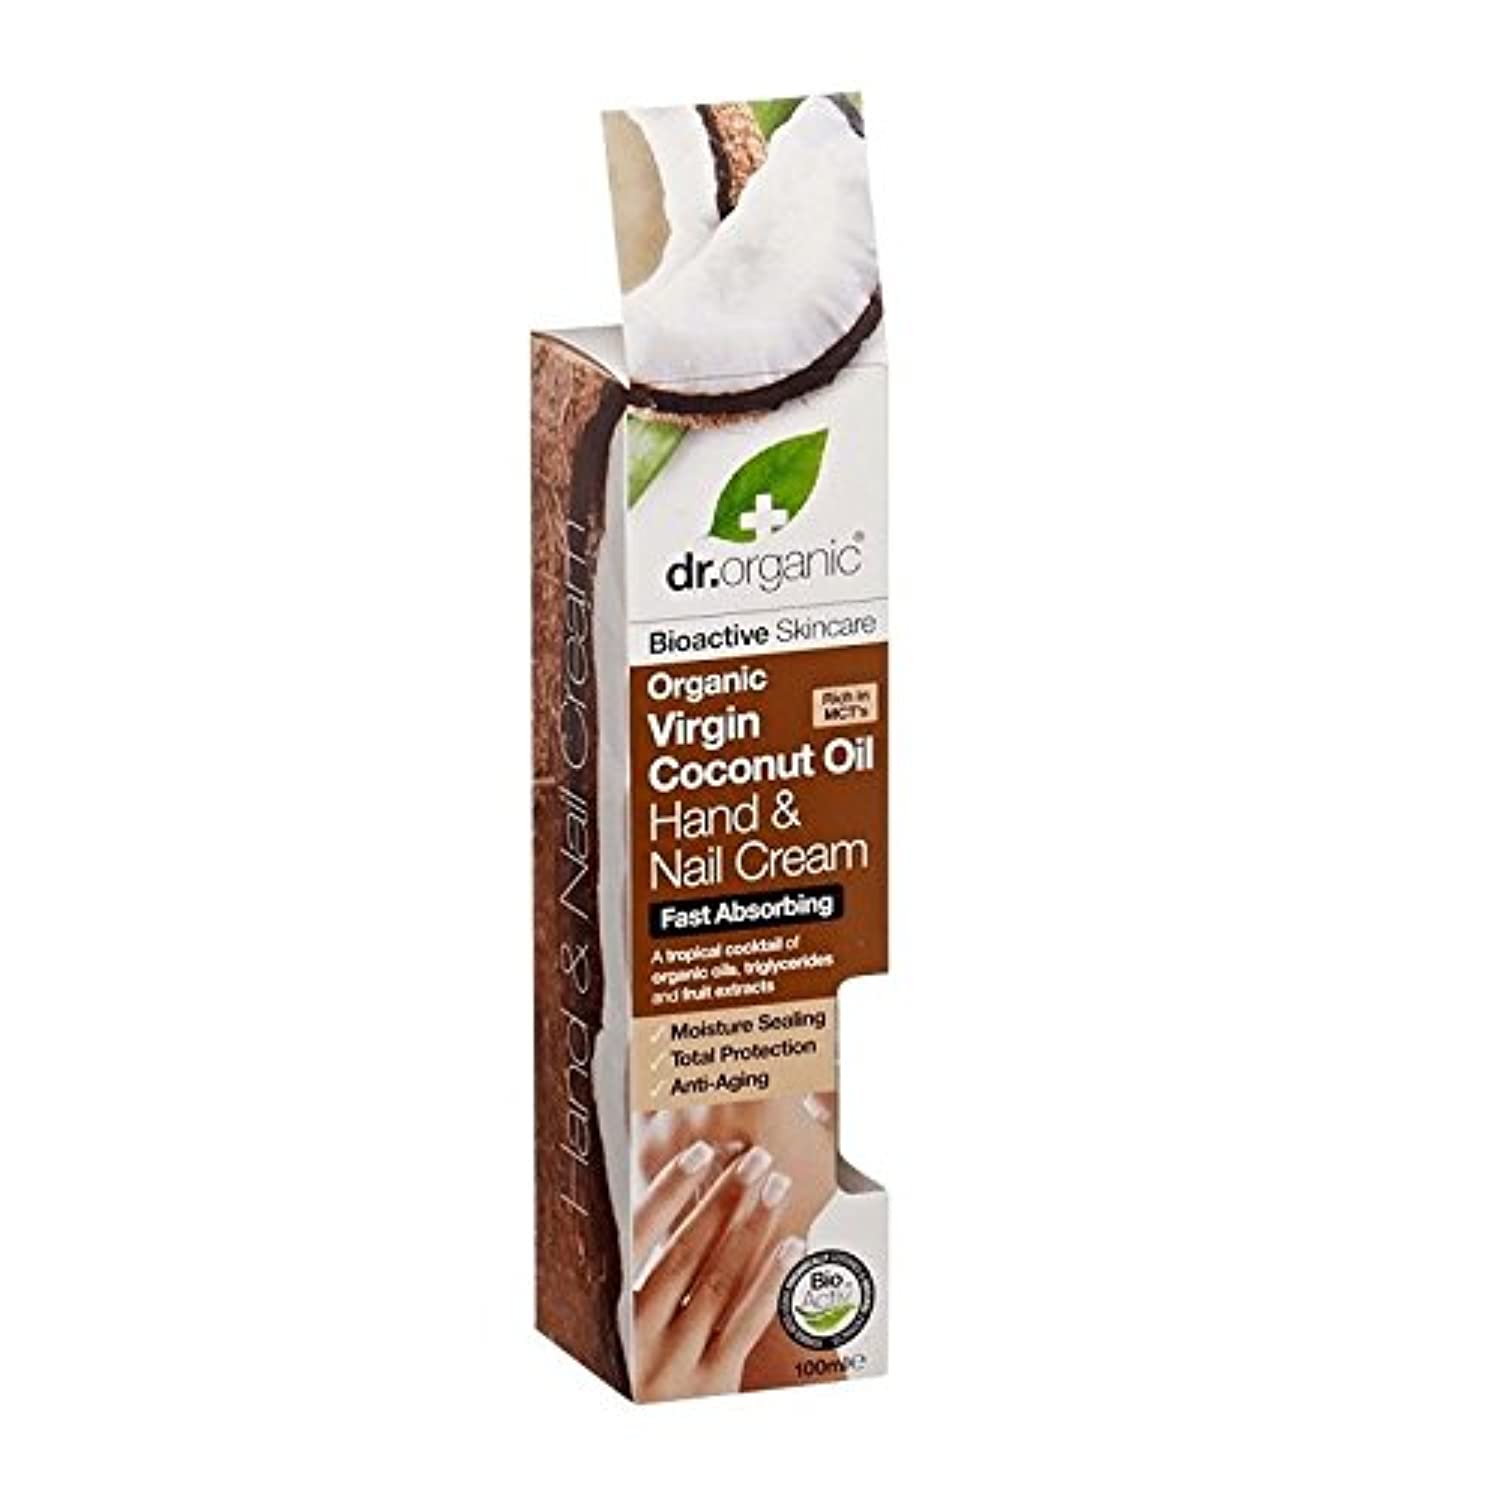 Dr Organic Virgin Coconut Oil Hand & Nail Cream